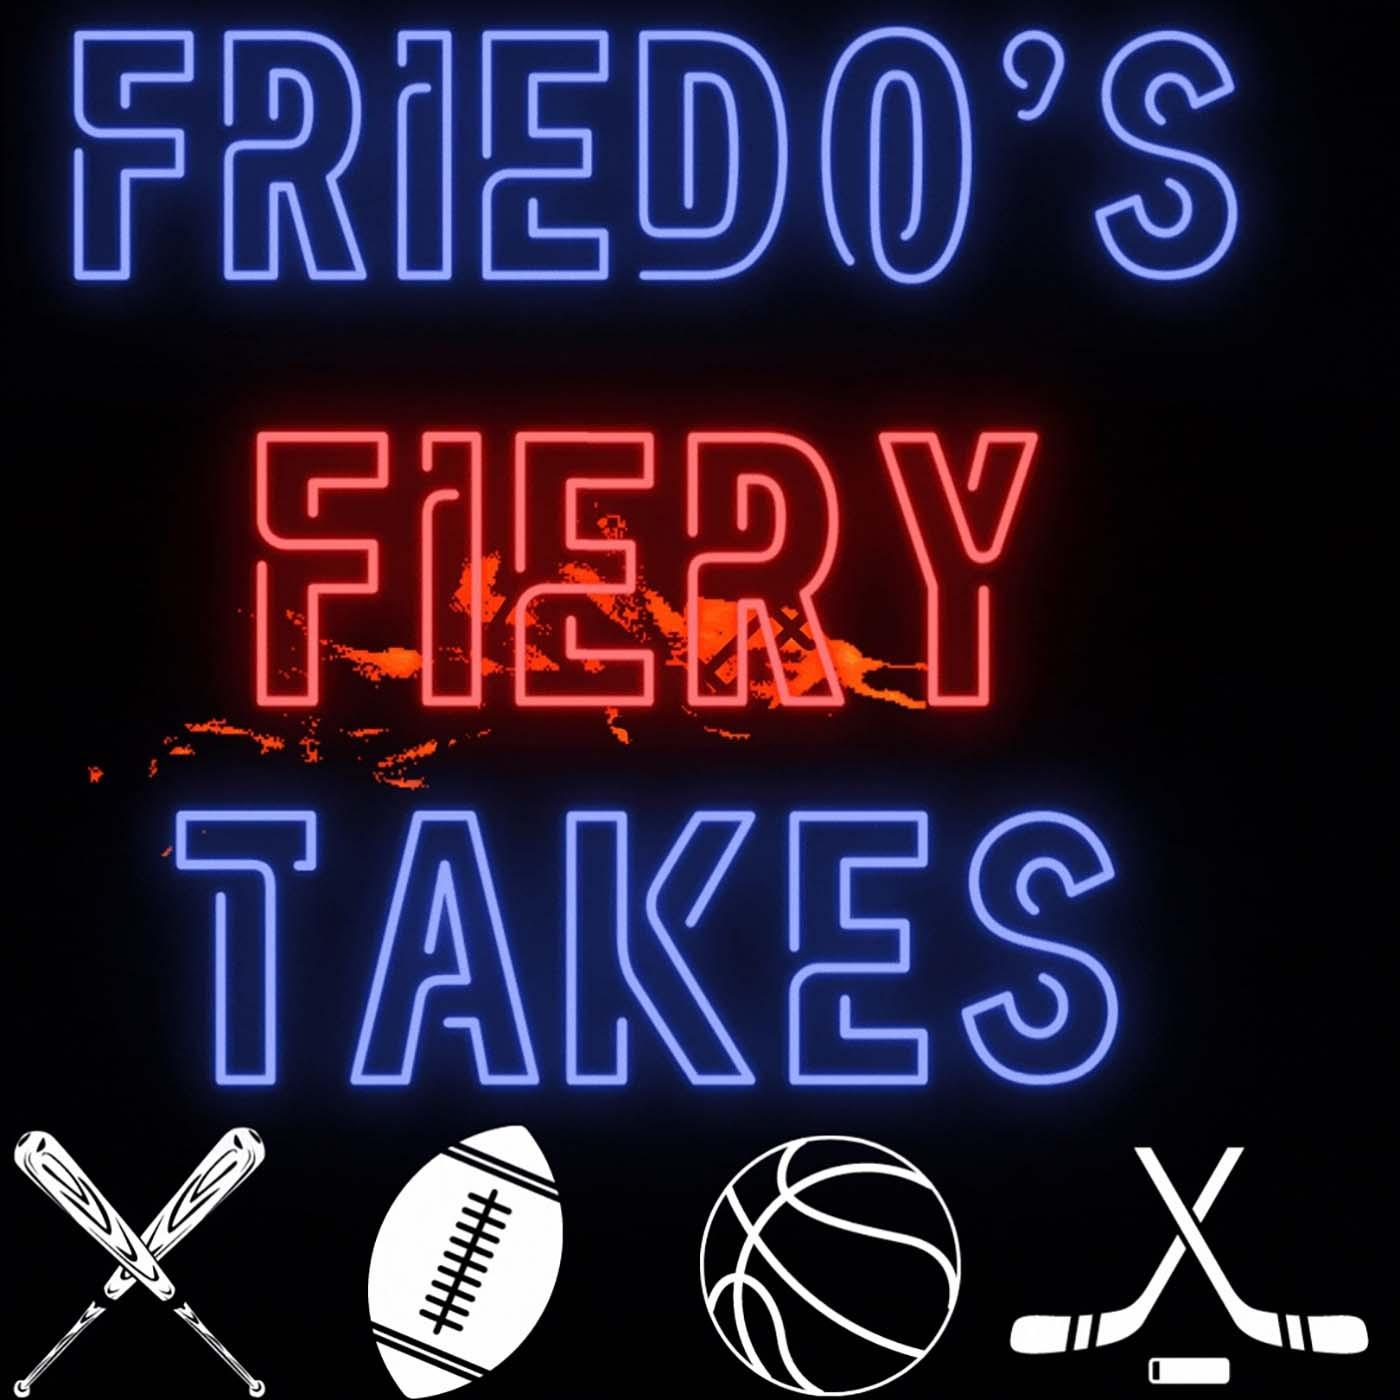 Friedo's Fiery Takes